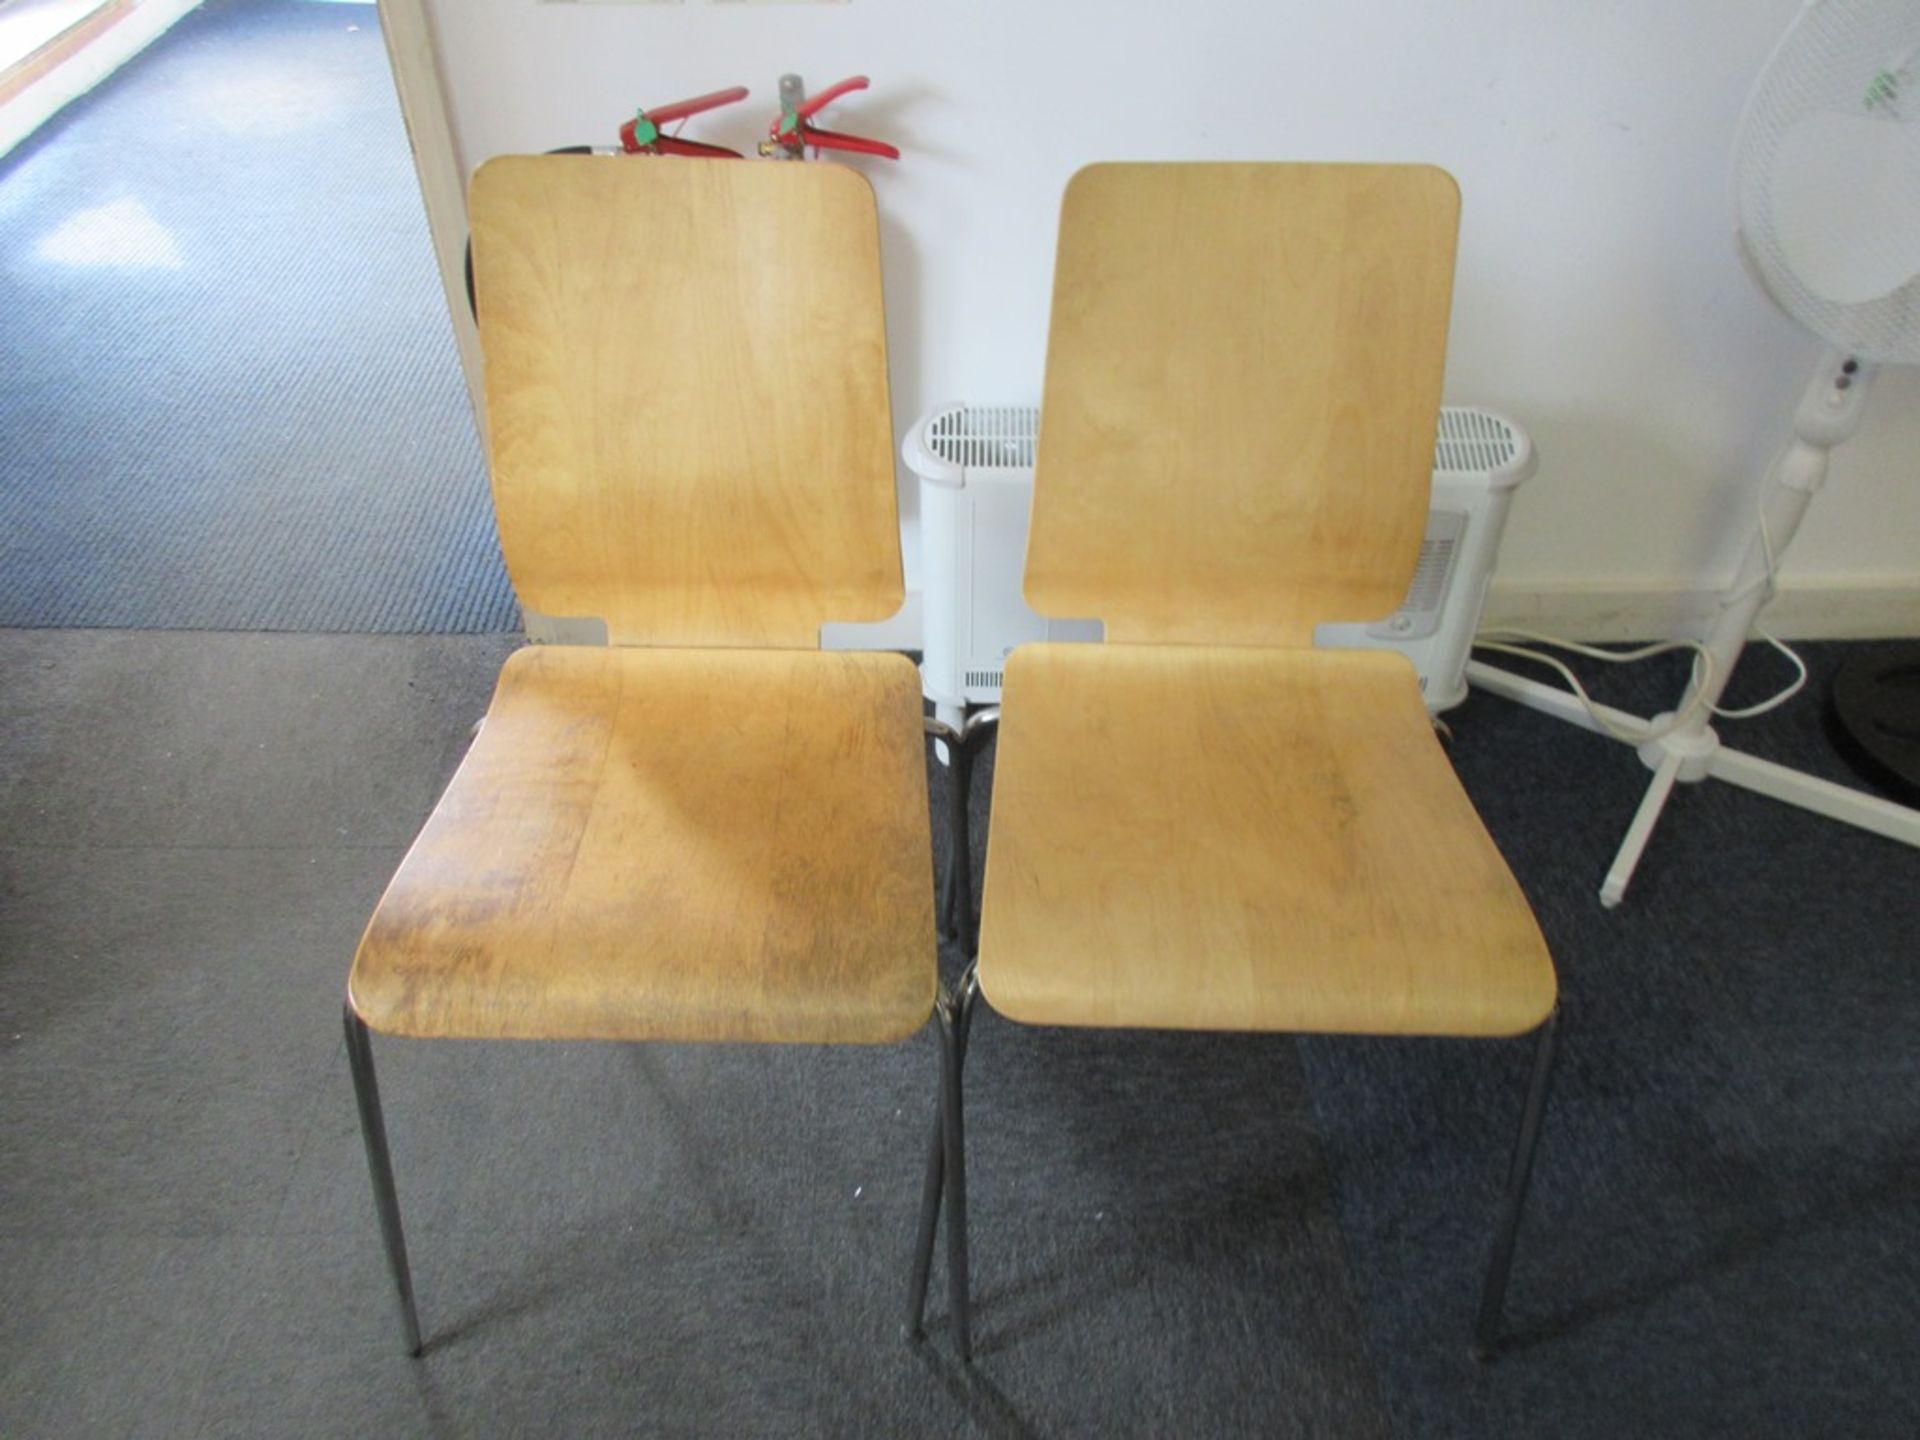 Light wood effect corner work station with 3-drawer pedestal, upholstered swivel chair, light wood - Image 4 of 5